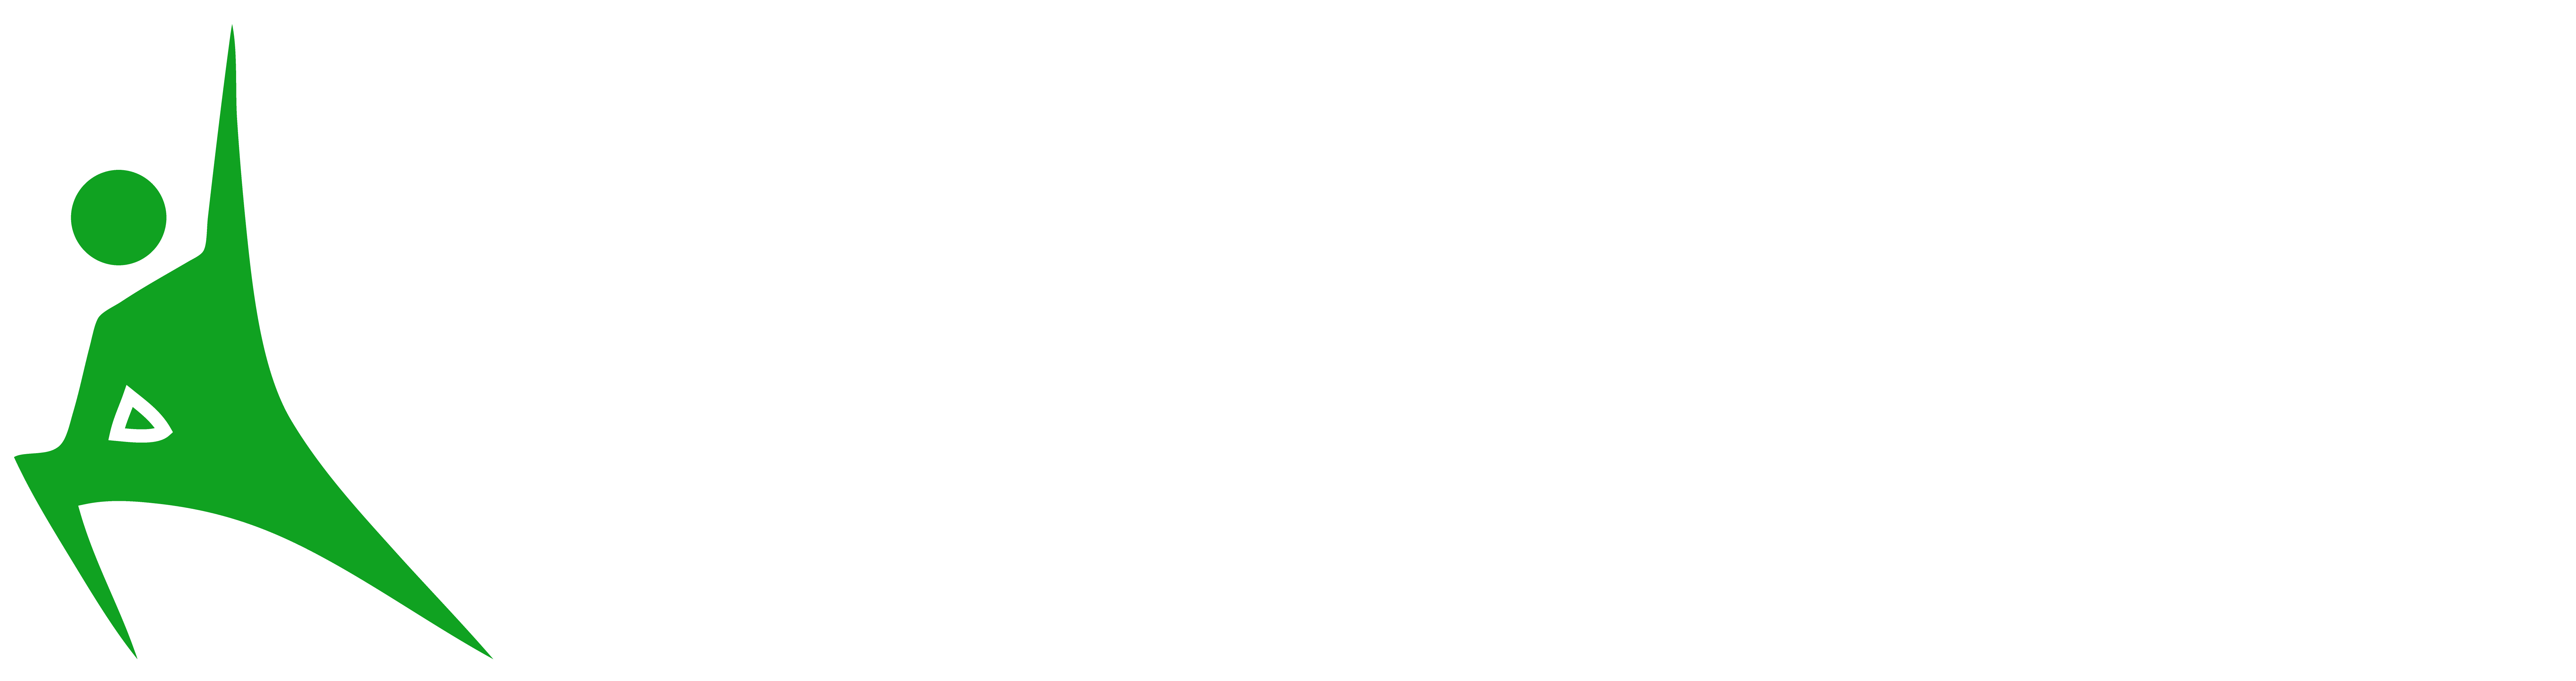 Axminster Gymnastics Club